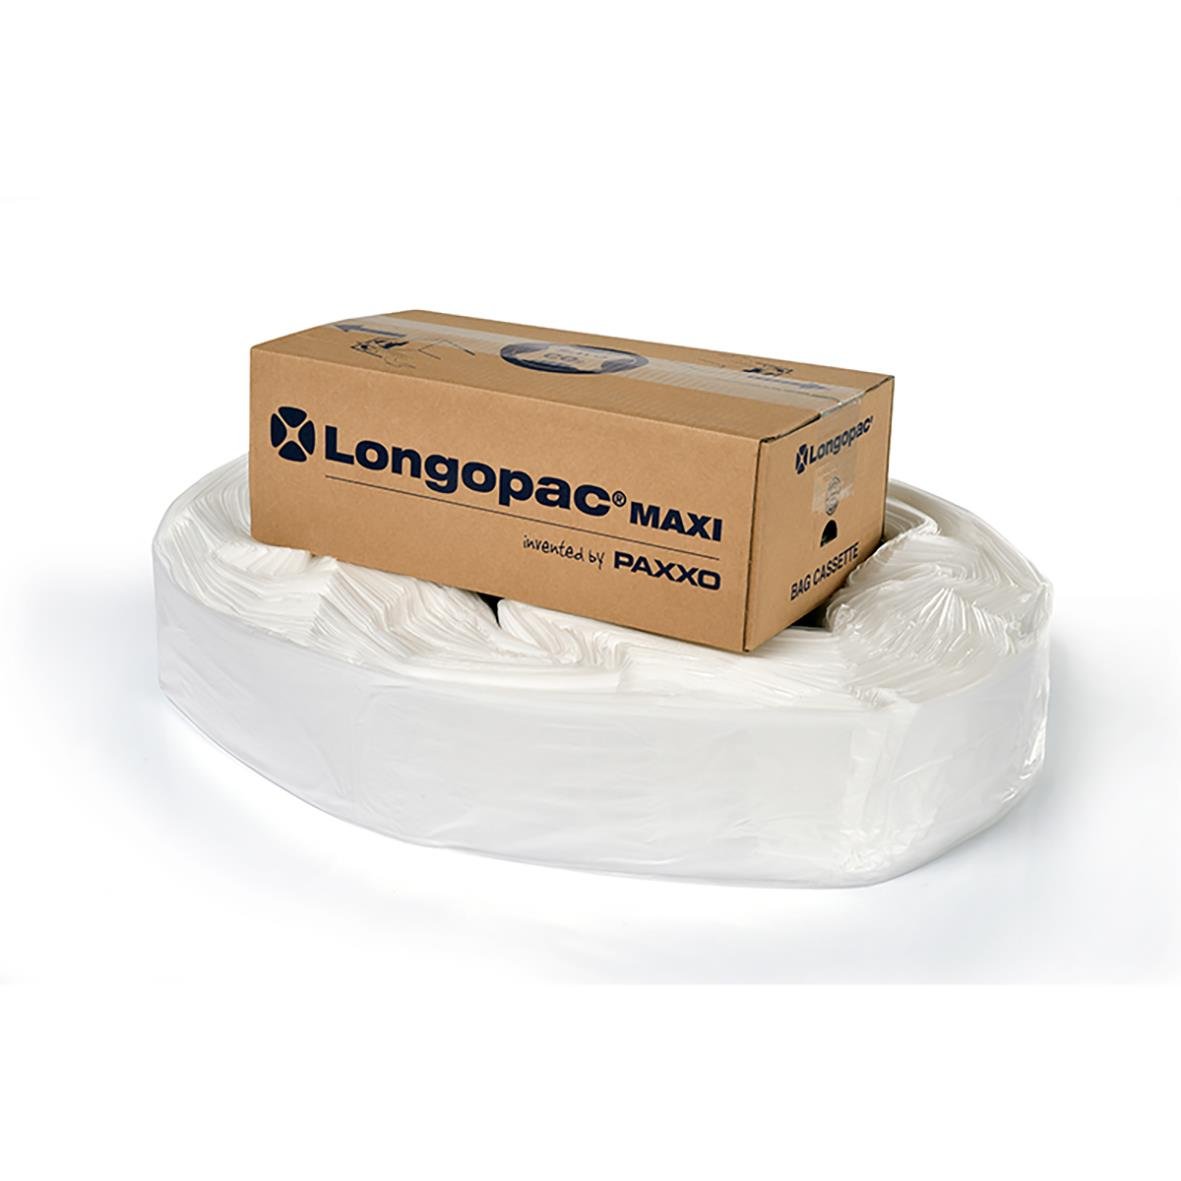 Sopsäcksslang Longopac Maxi Extra-Strong Transparent Ø570mm x 70m 61200542